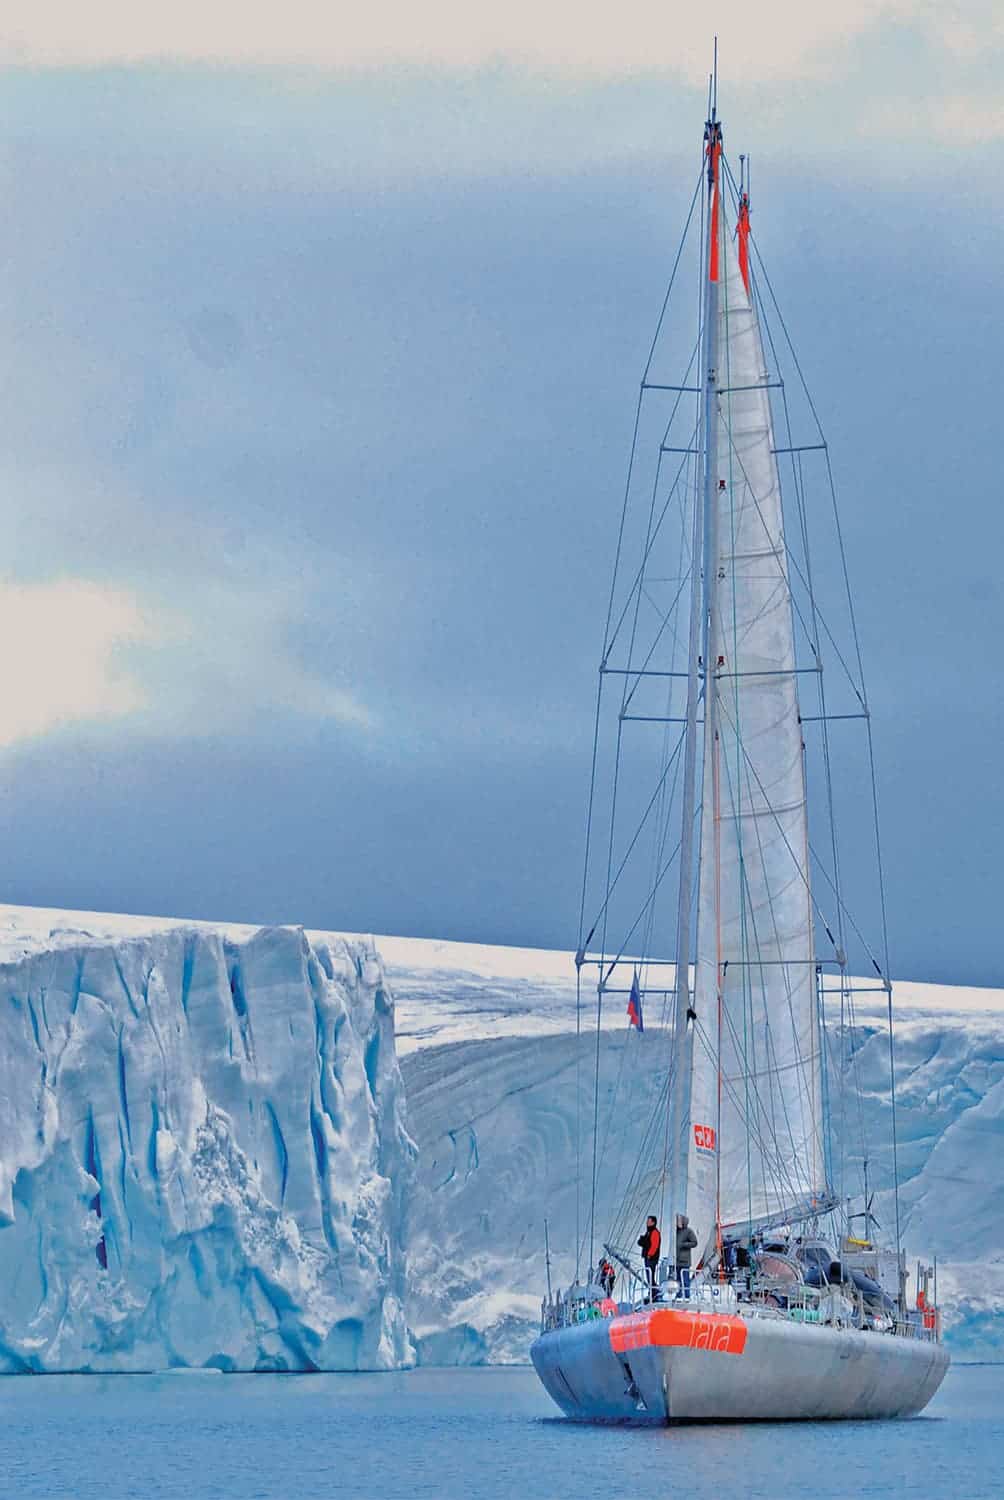 The schooner Tara in the Arctic. Image credist: Tara Foundation.